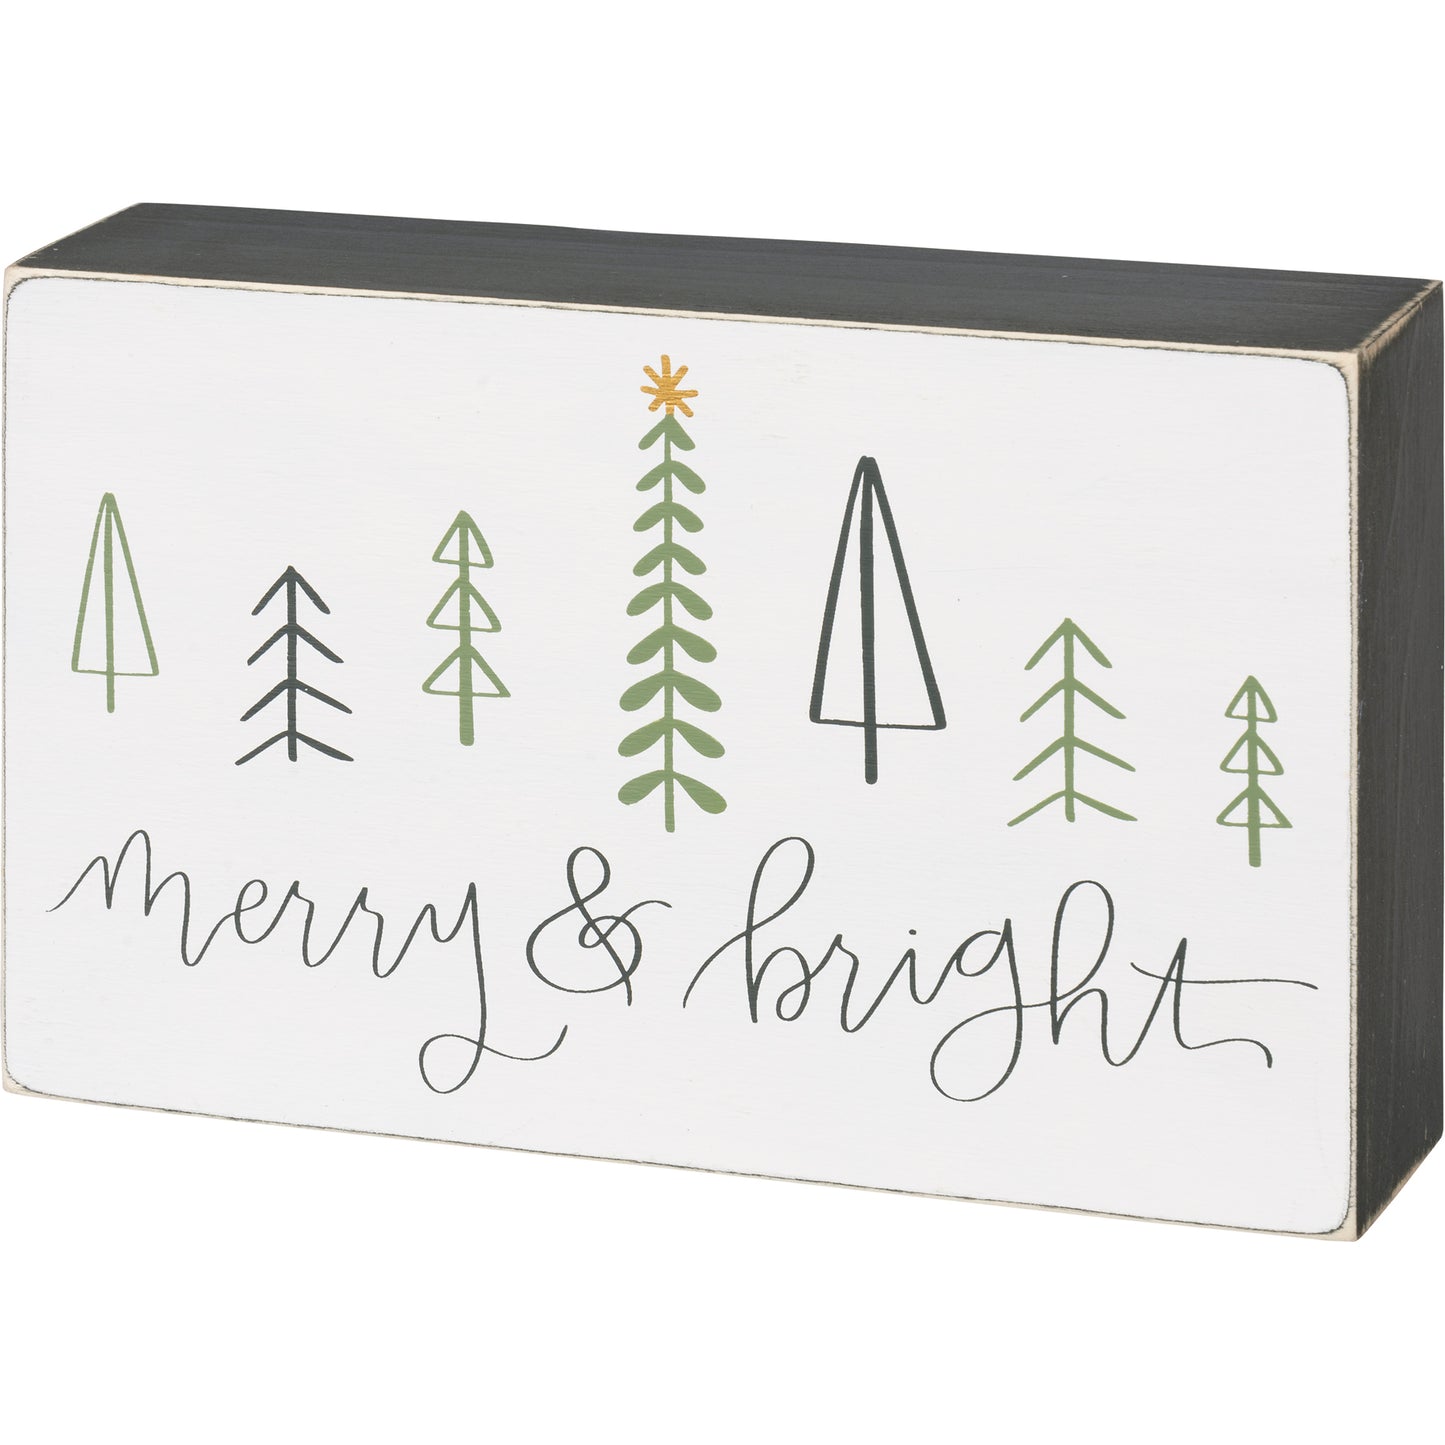 Merry & Bright Tree Box Sign